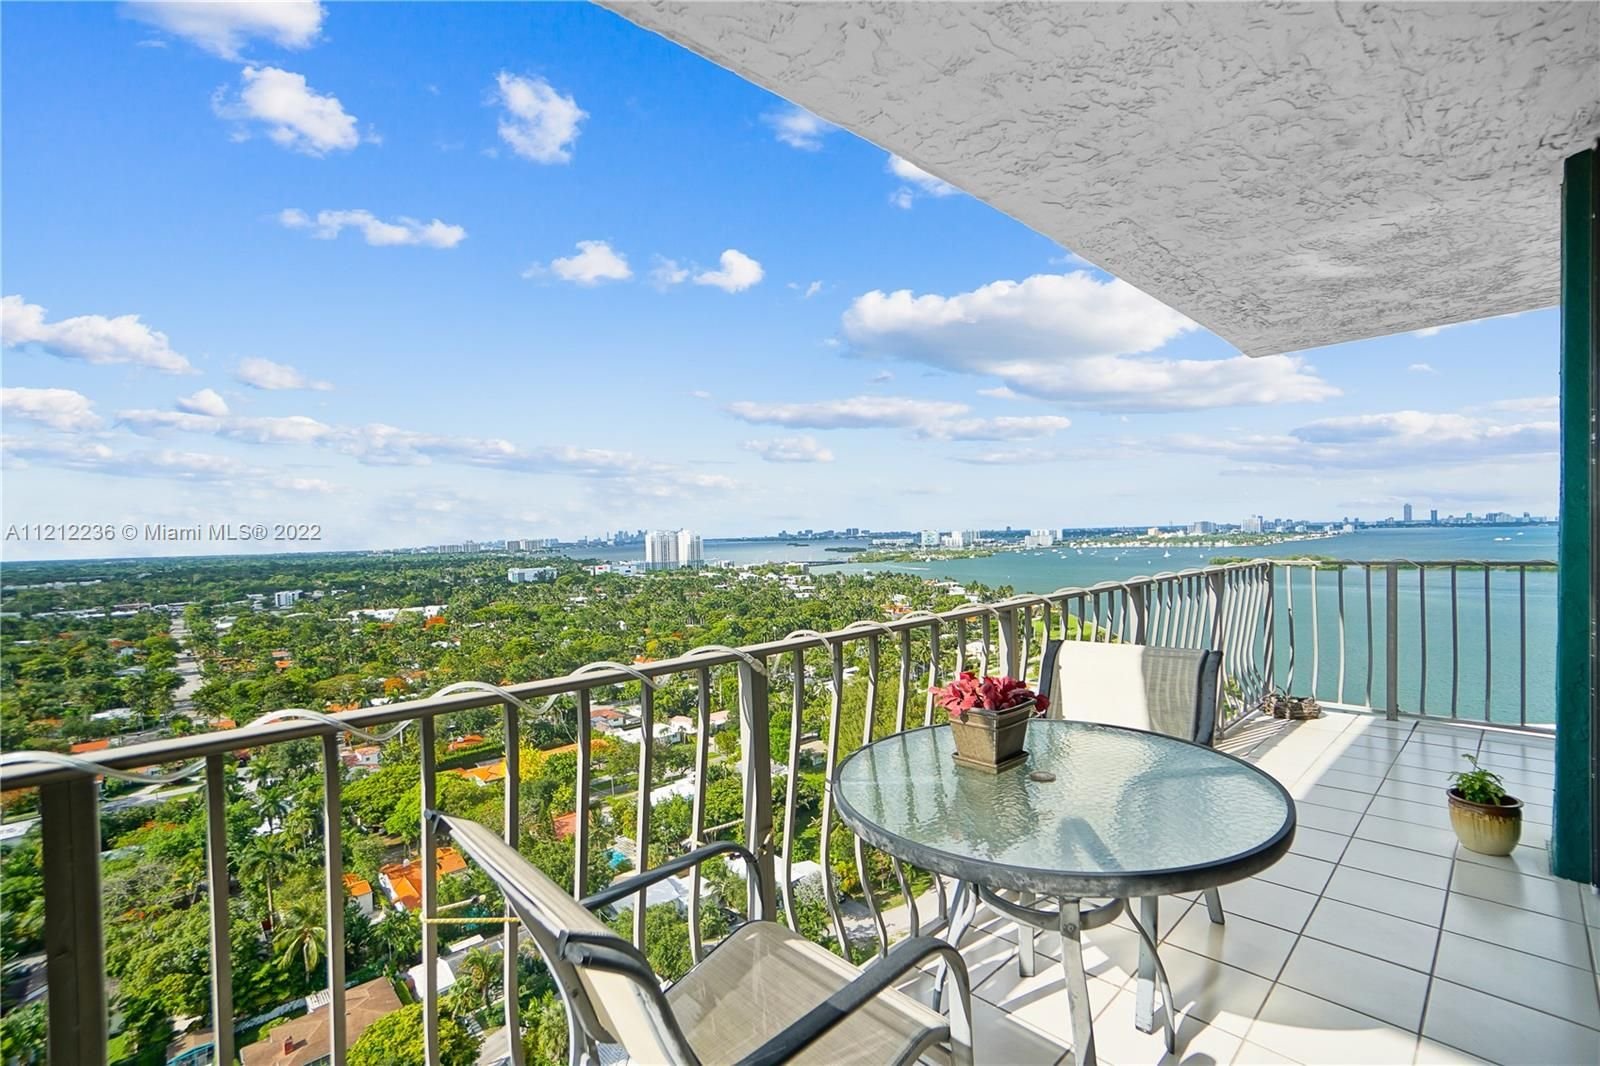 Real estate property located at 780 69th St #2302, Miami-Dade County, Miami, FL